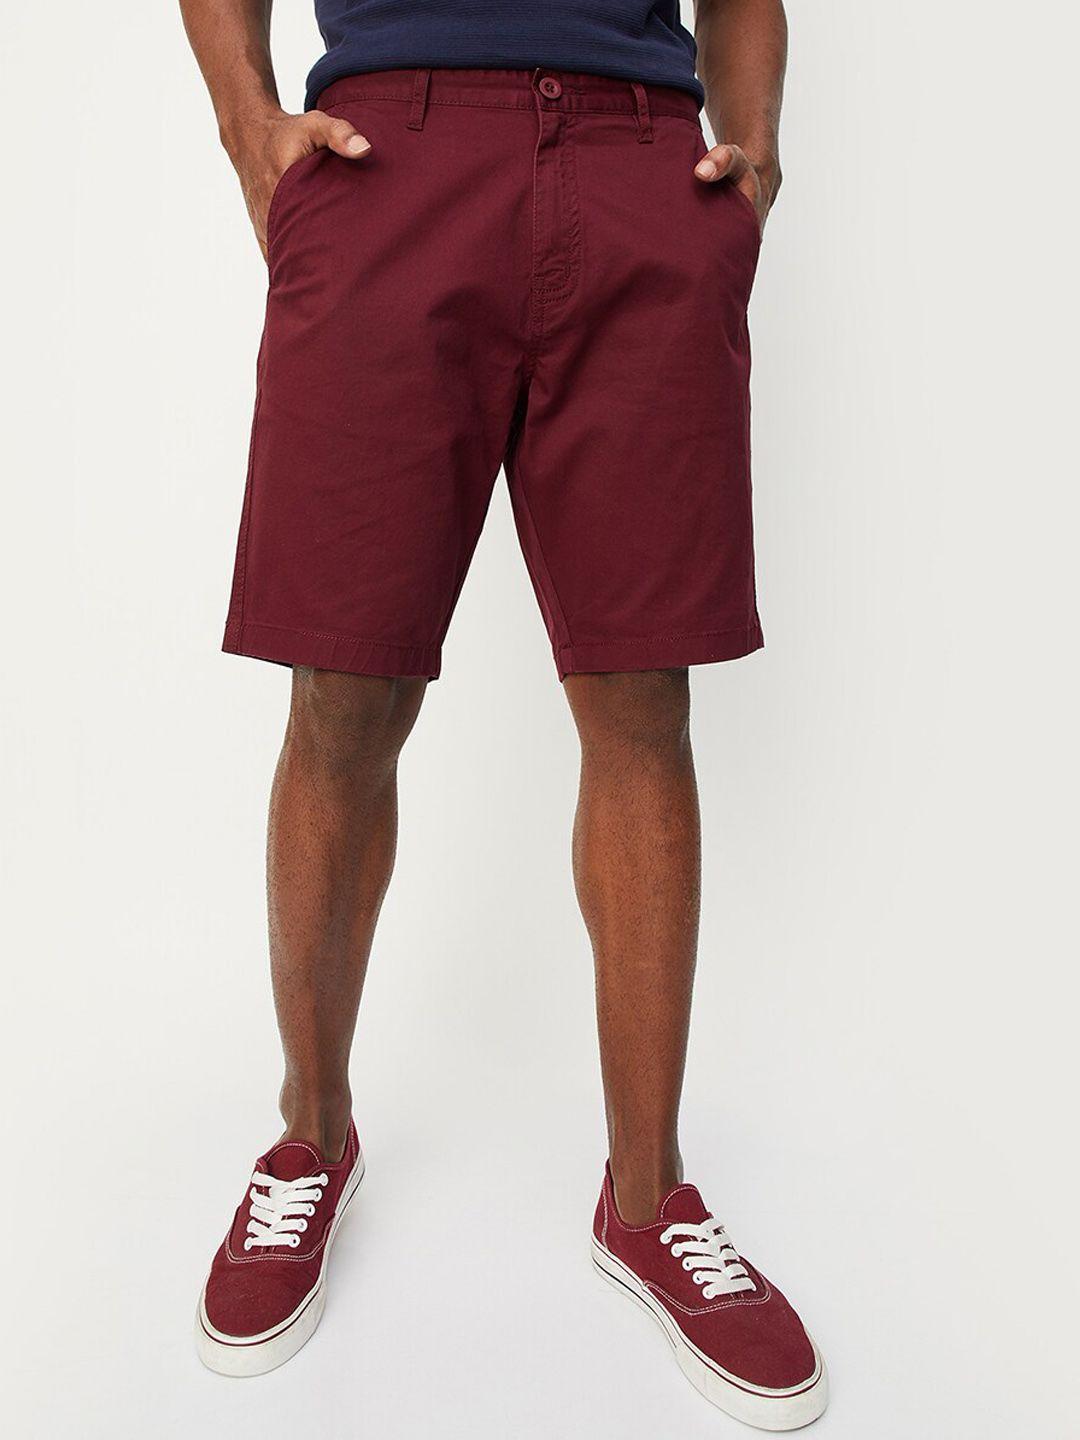 max men red sports shorts